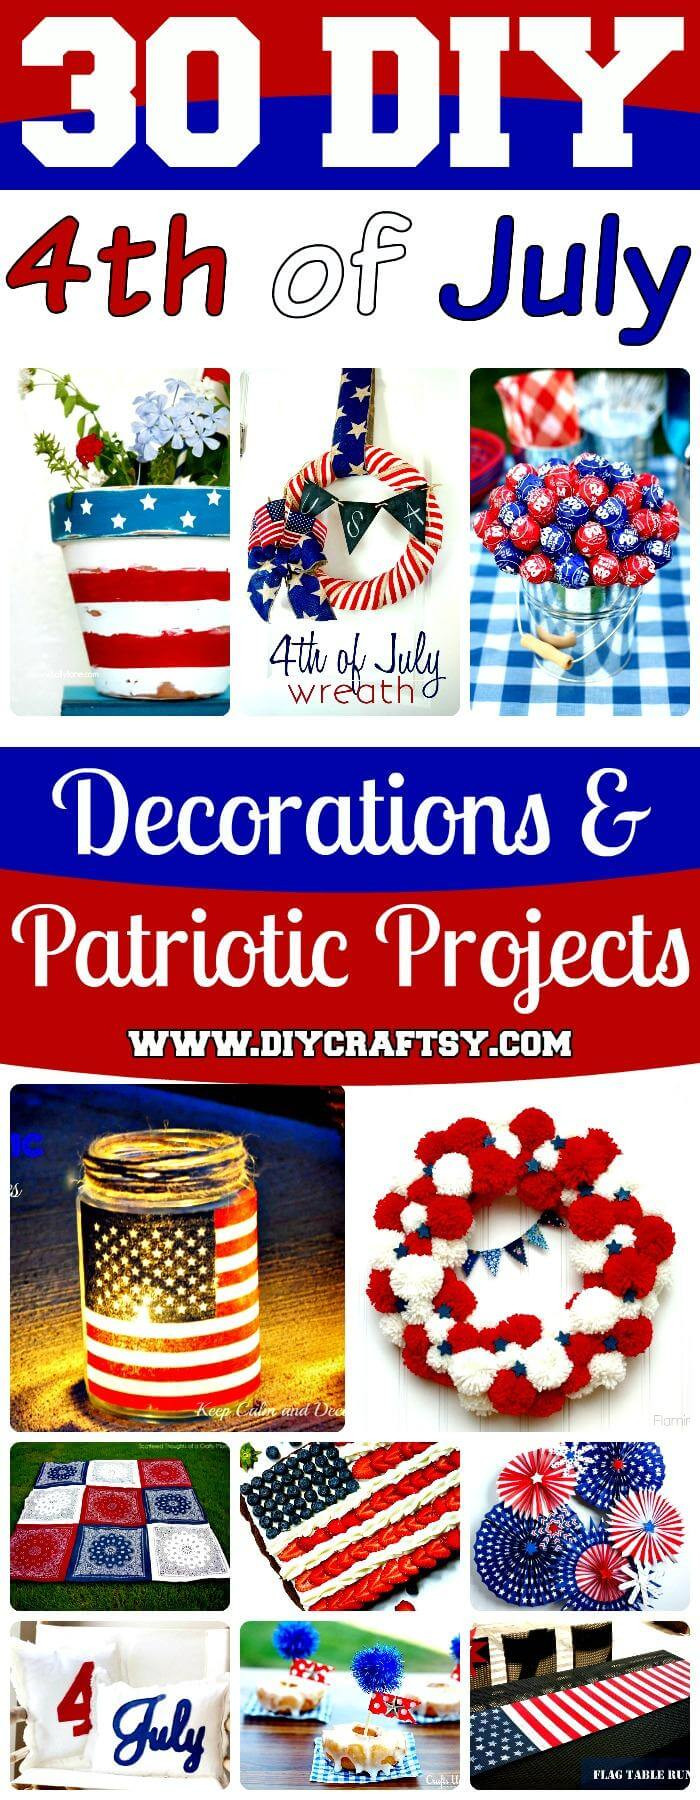 Diy Fourth Of July Decorations
 30 DIY 4th of July Decorations Patriotic DIY Fourth of